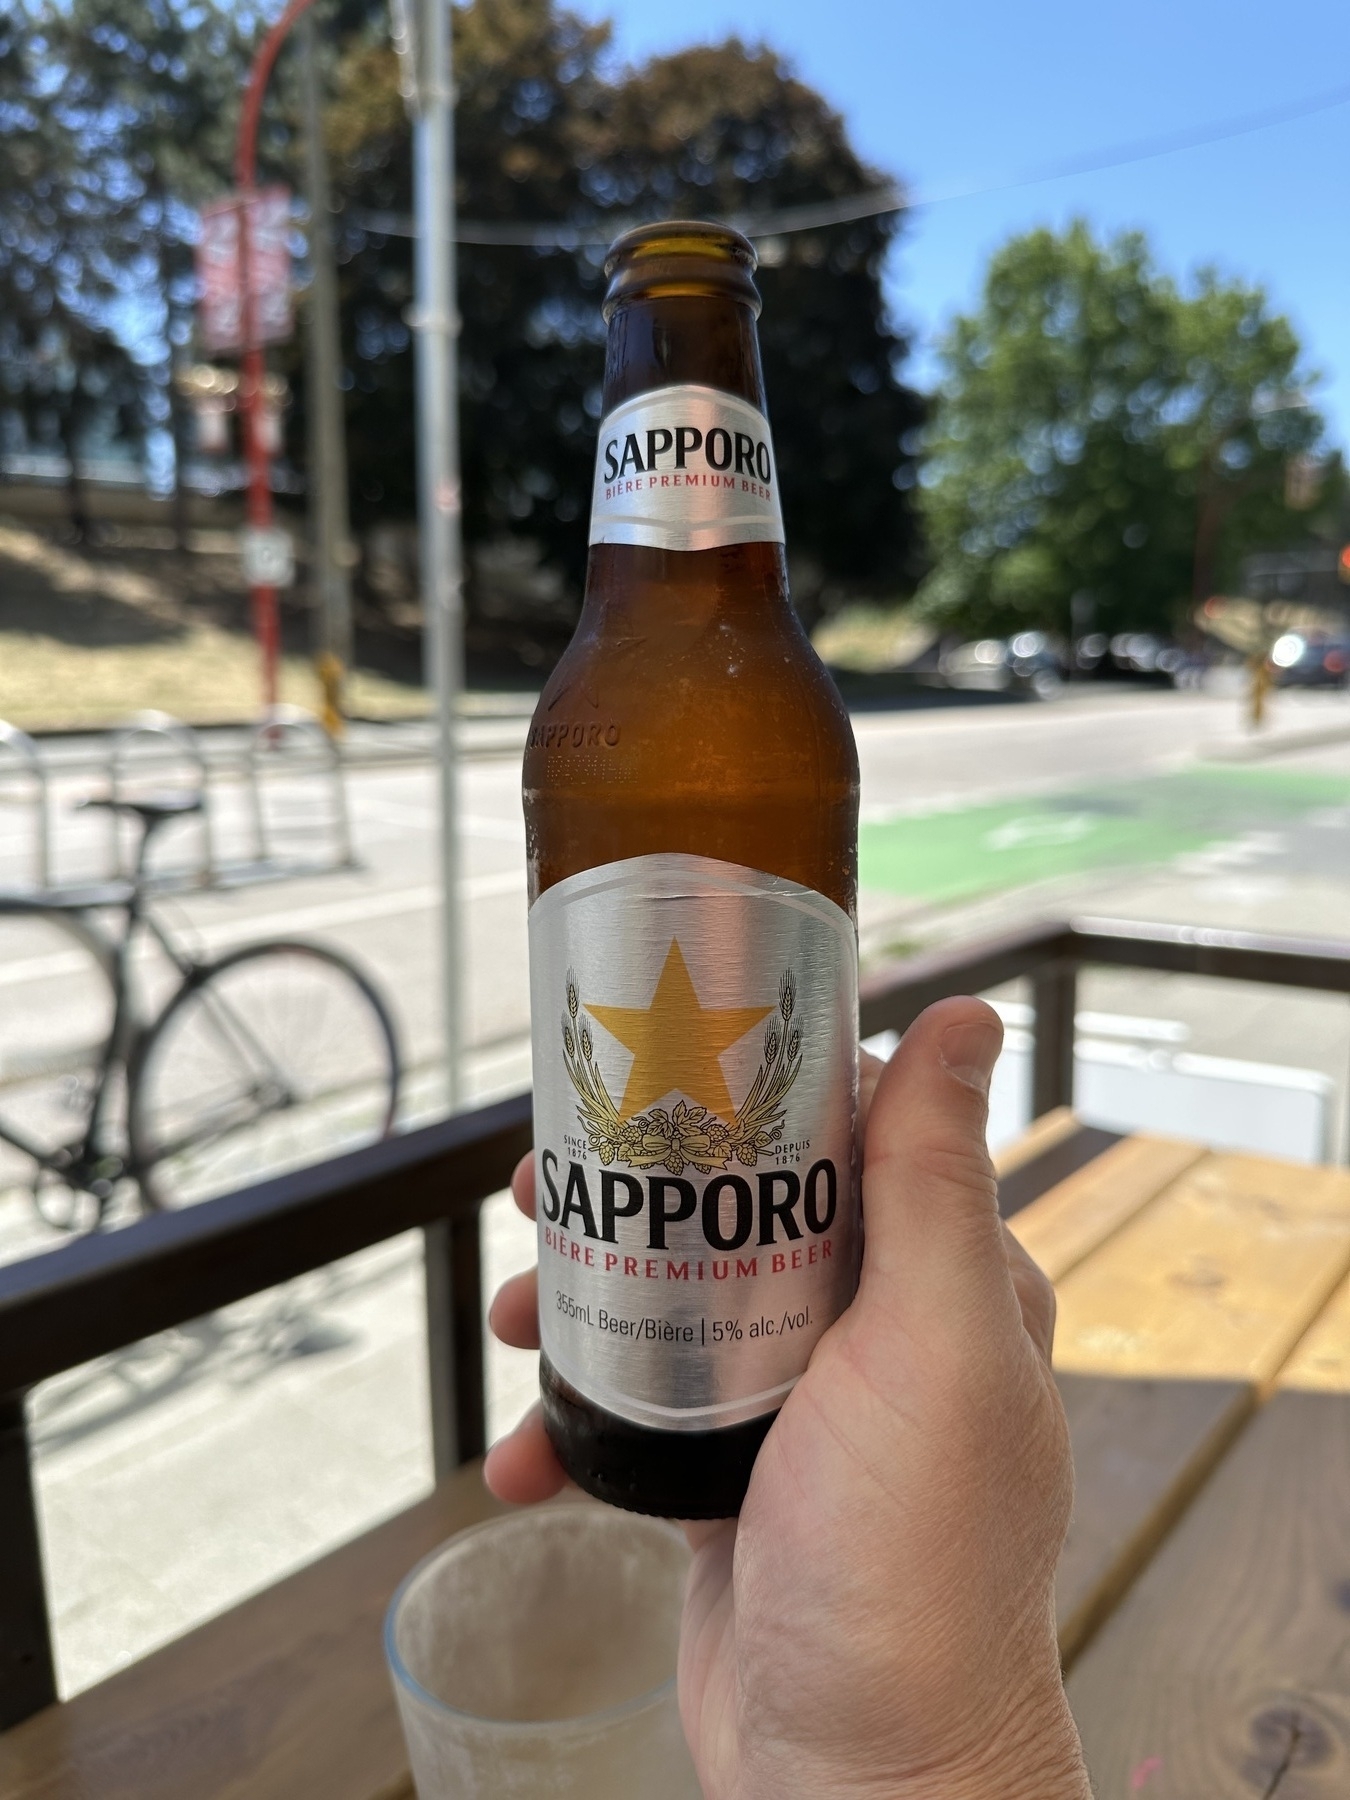 Bottle of Sapporo beer.